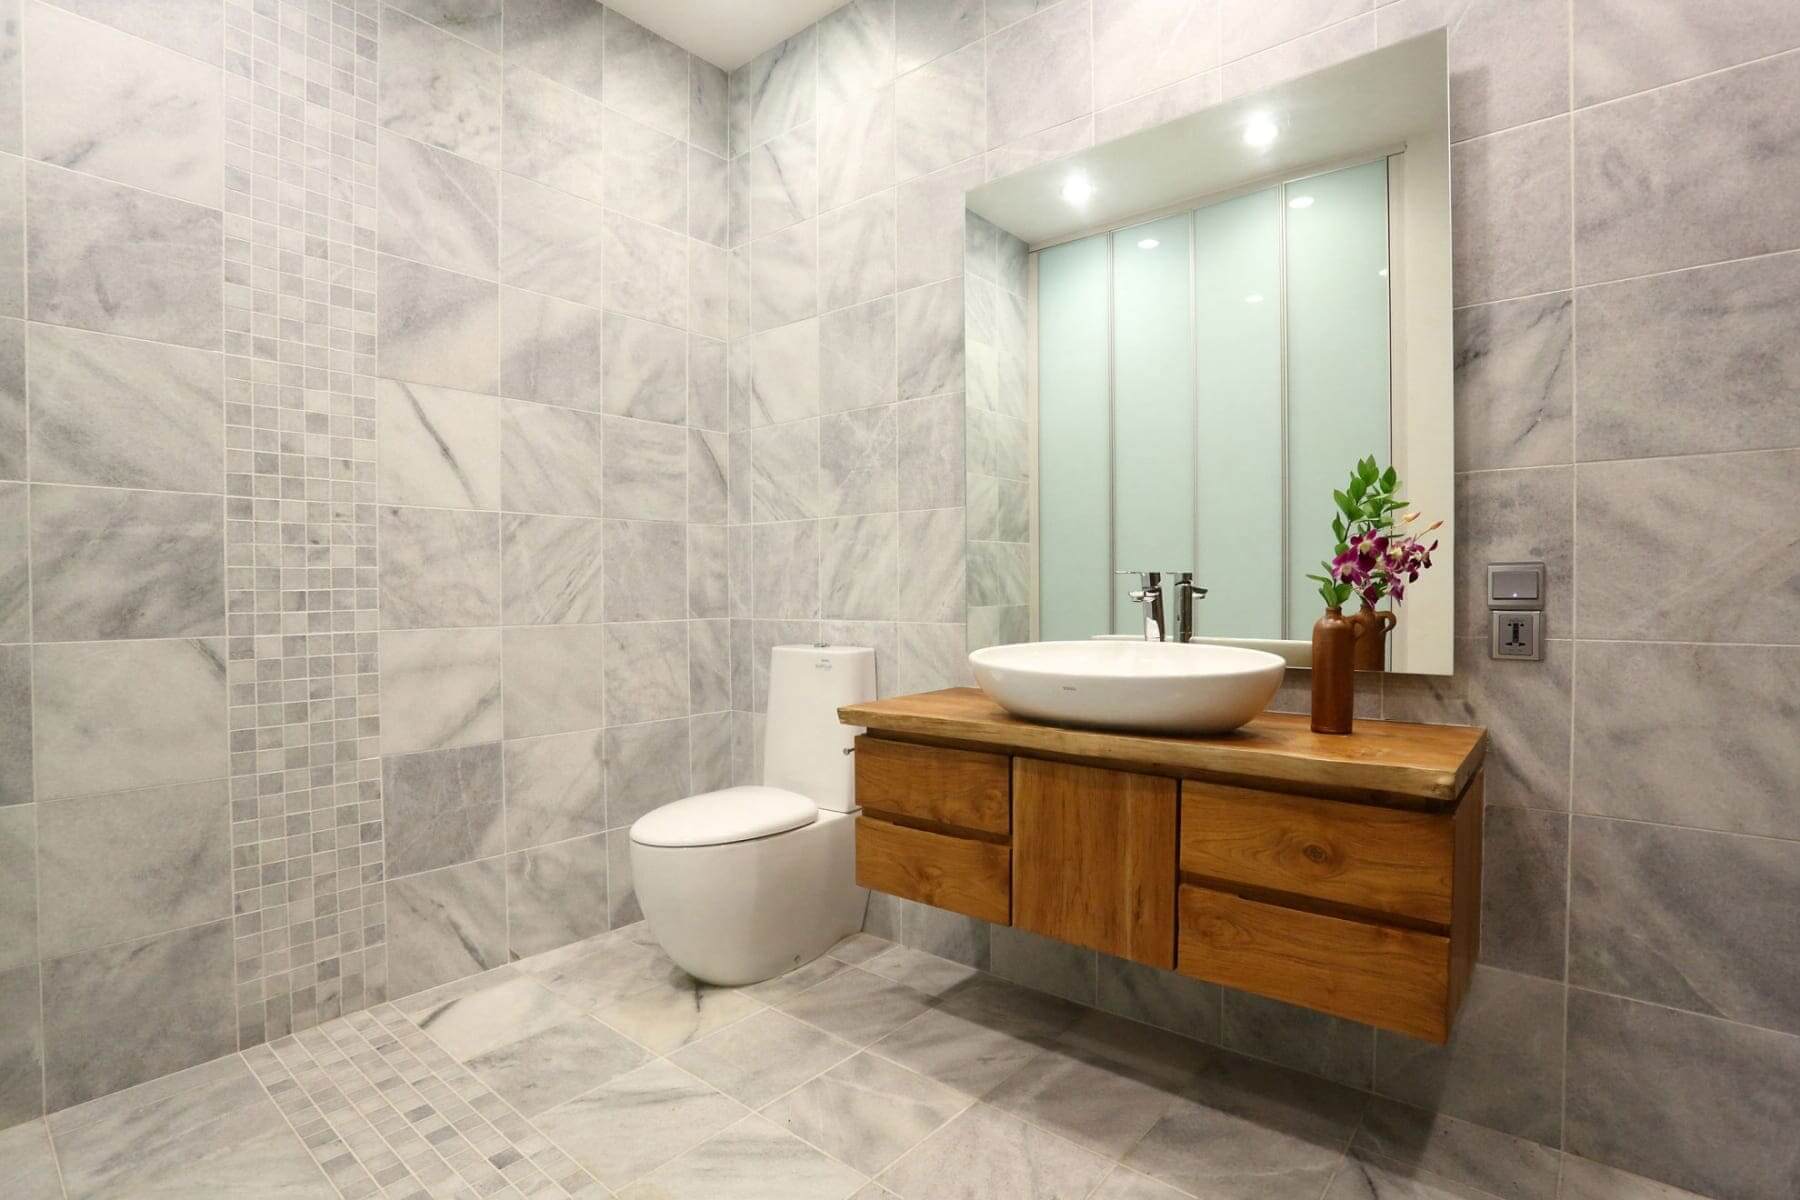 Marble is always a superior bathroom tile